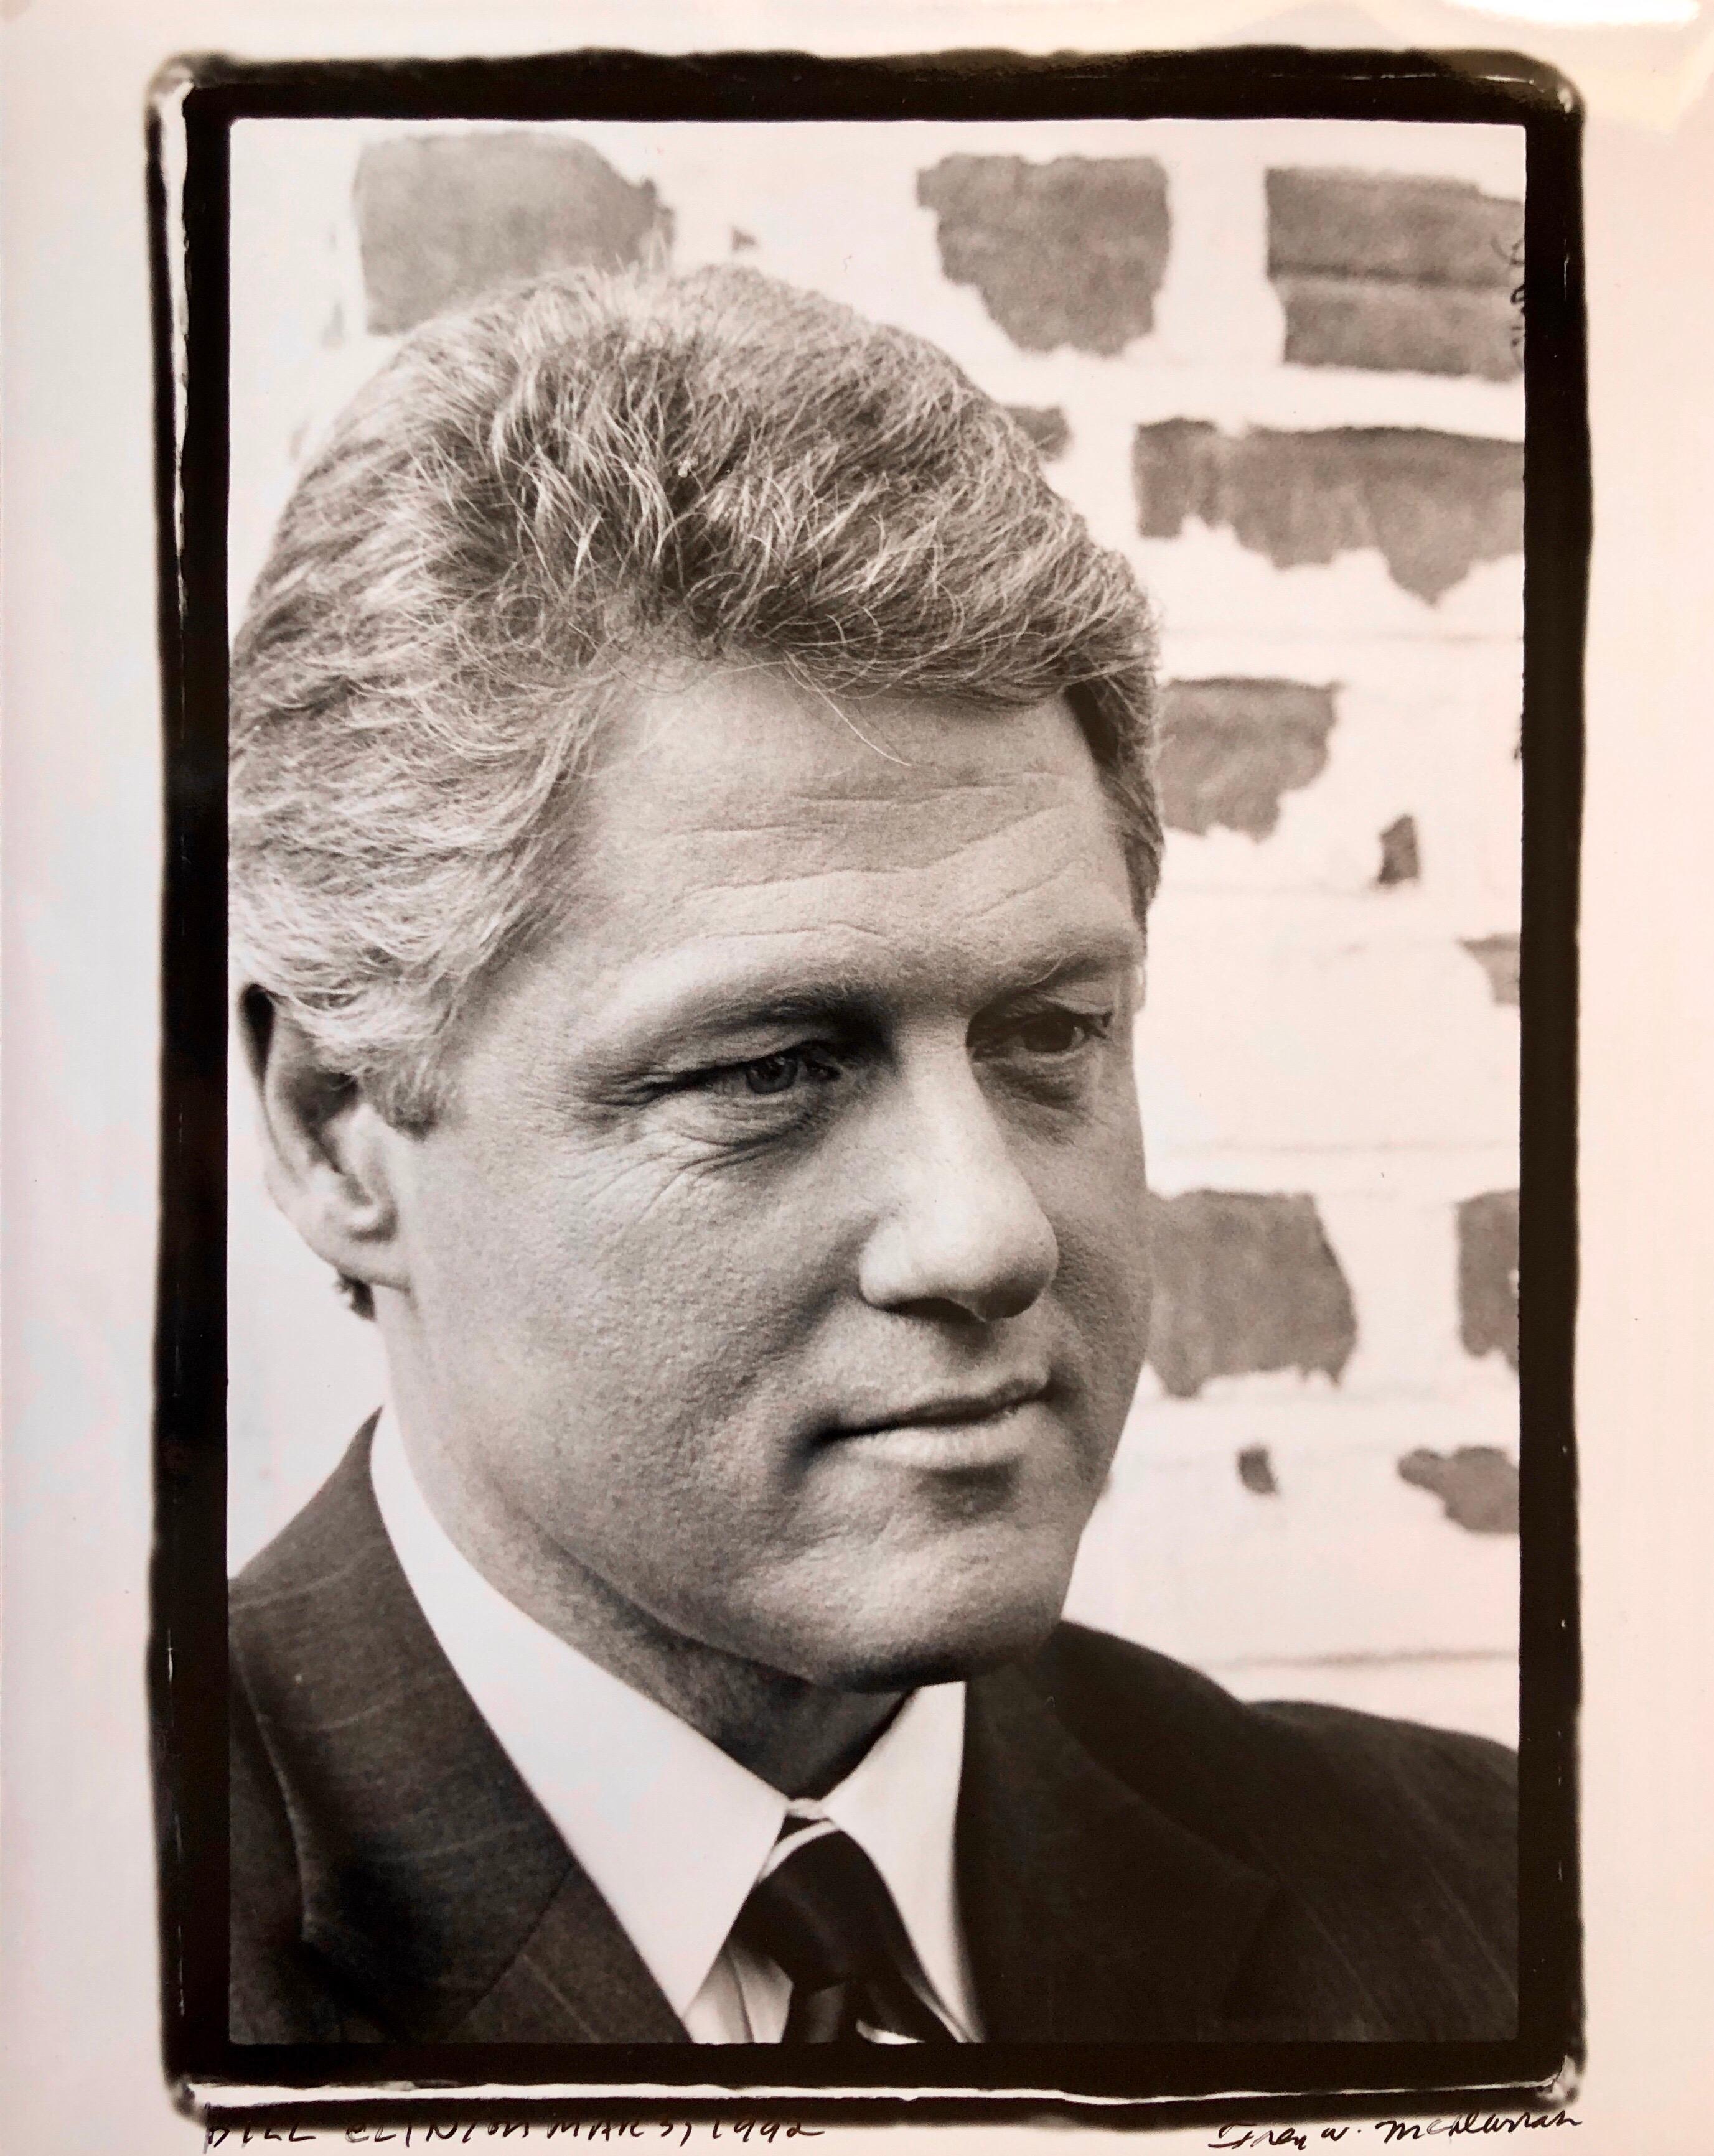 Fred McDarrah Figurative Photograph - Vintage Print Silver Gelatin Signed Photograph President Bill Clinton Portrait